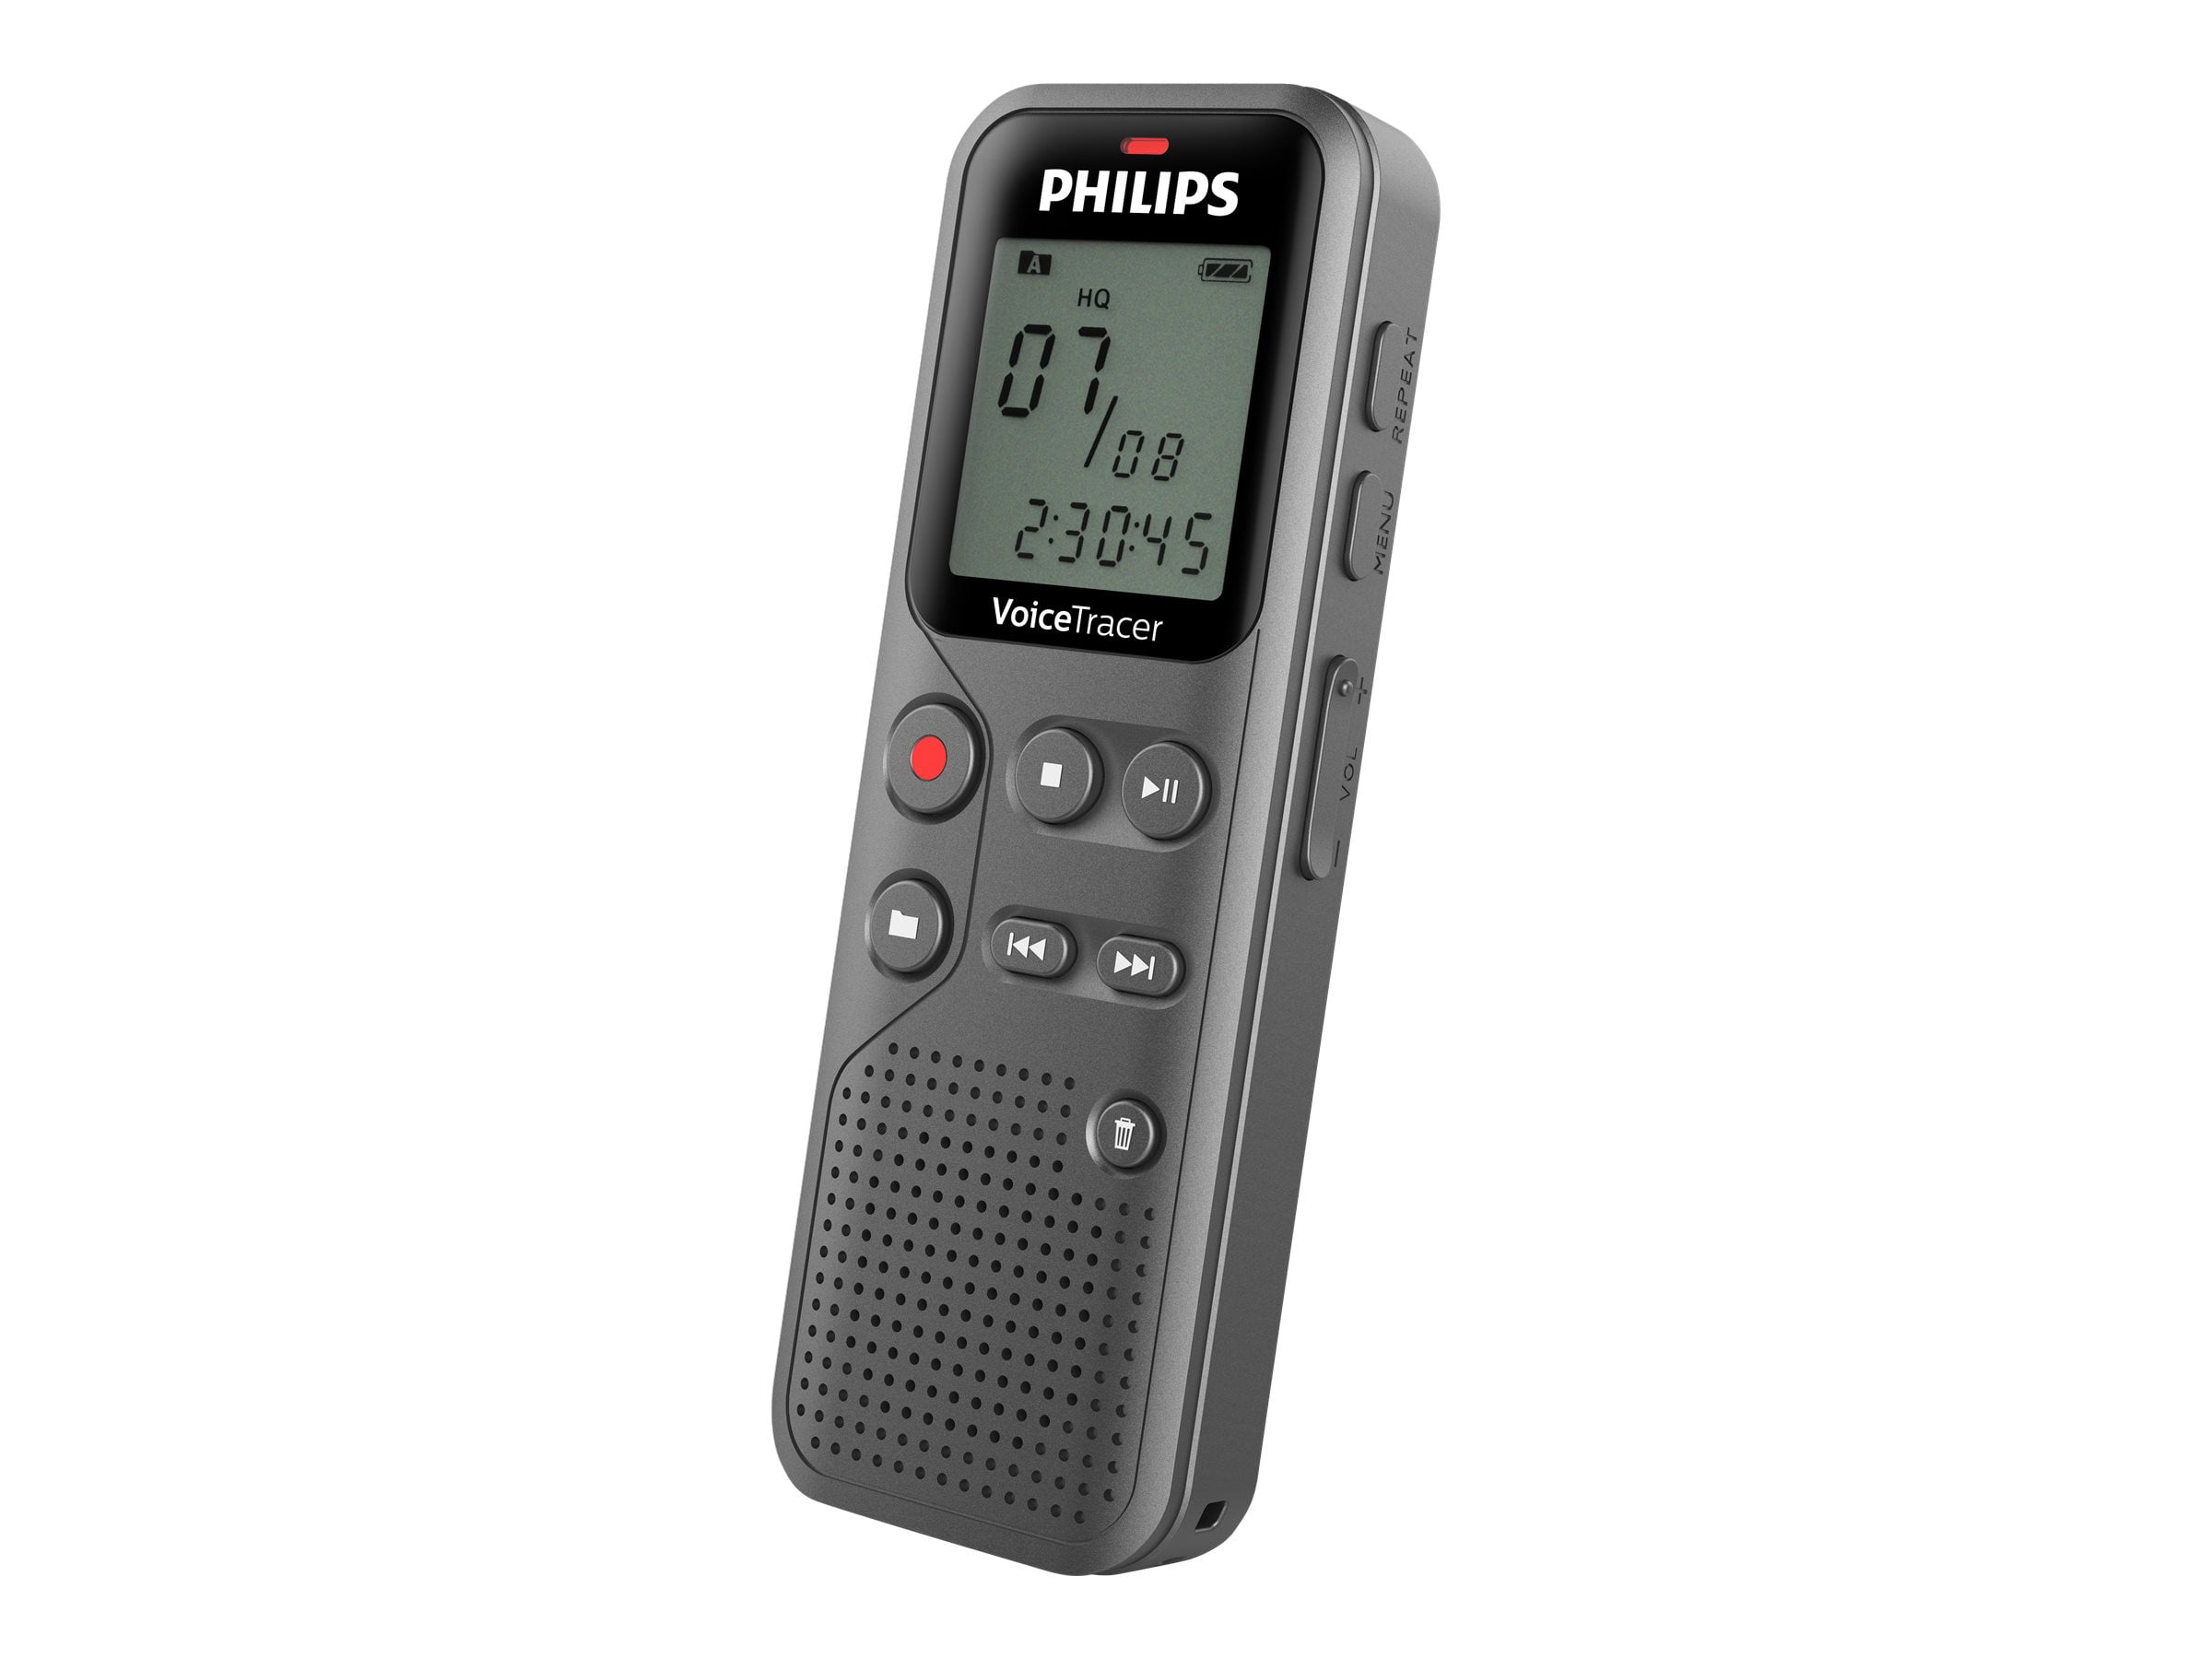 Philips Voice Tracer DVT1100 - Voice recorder - 4 GB - black